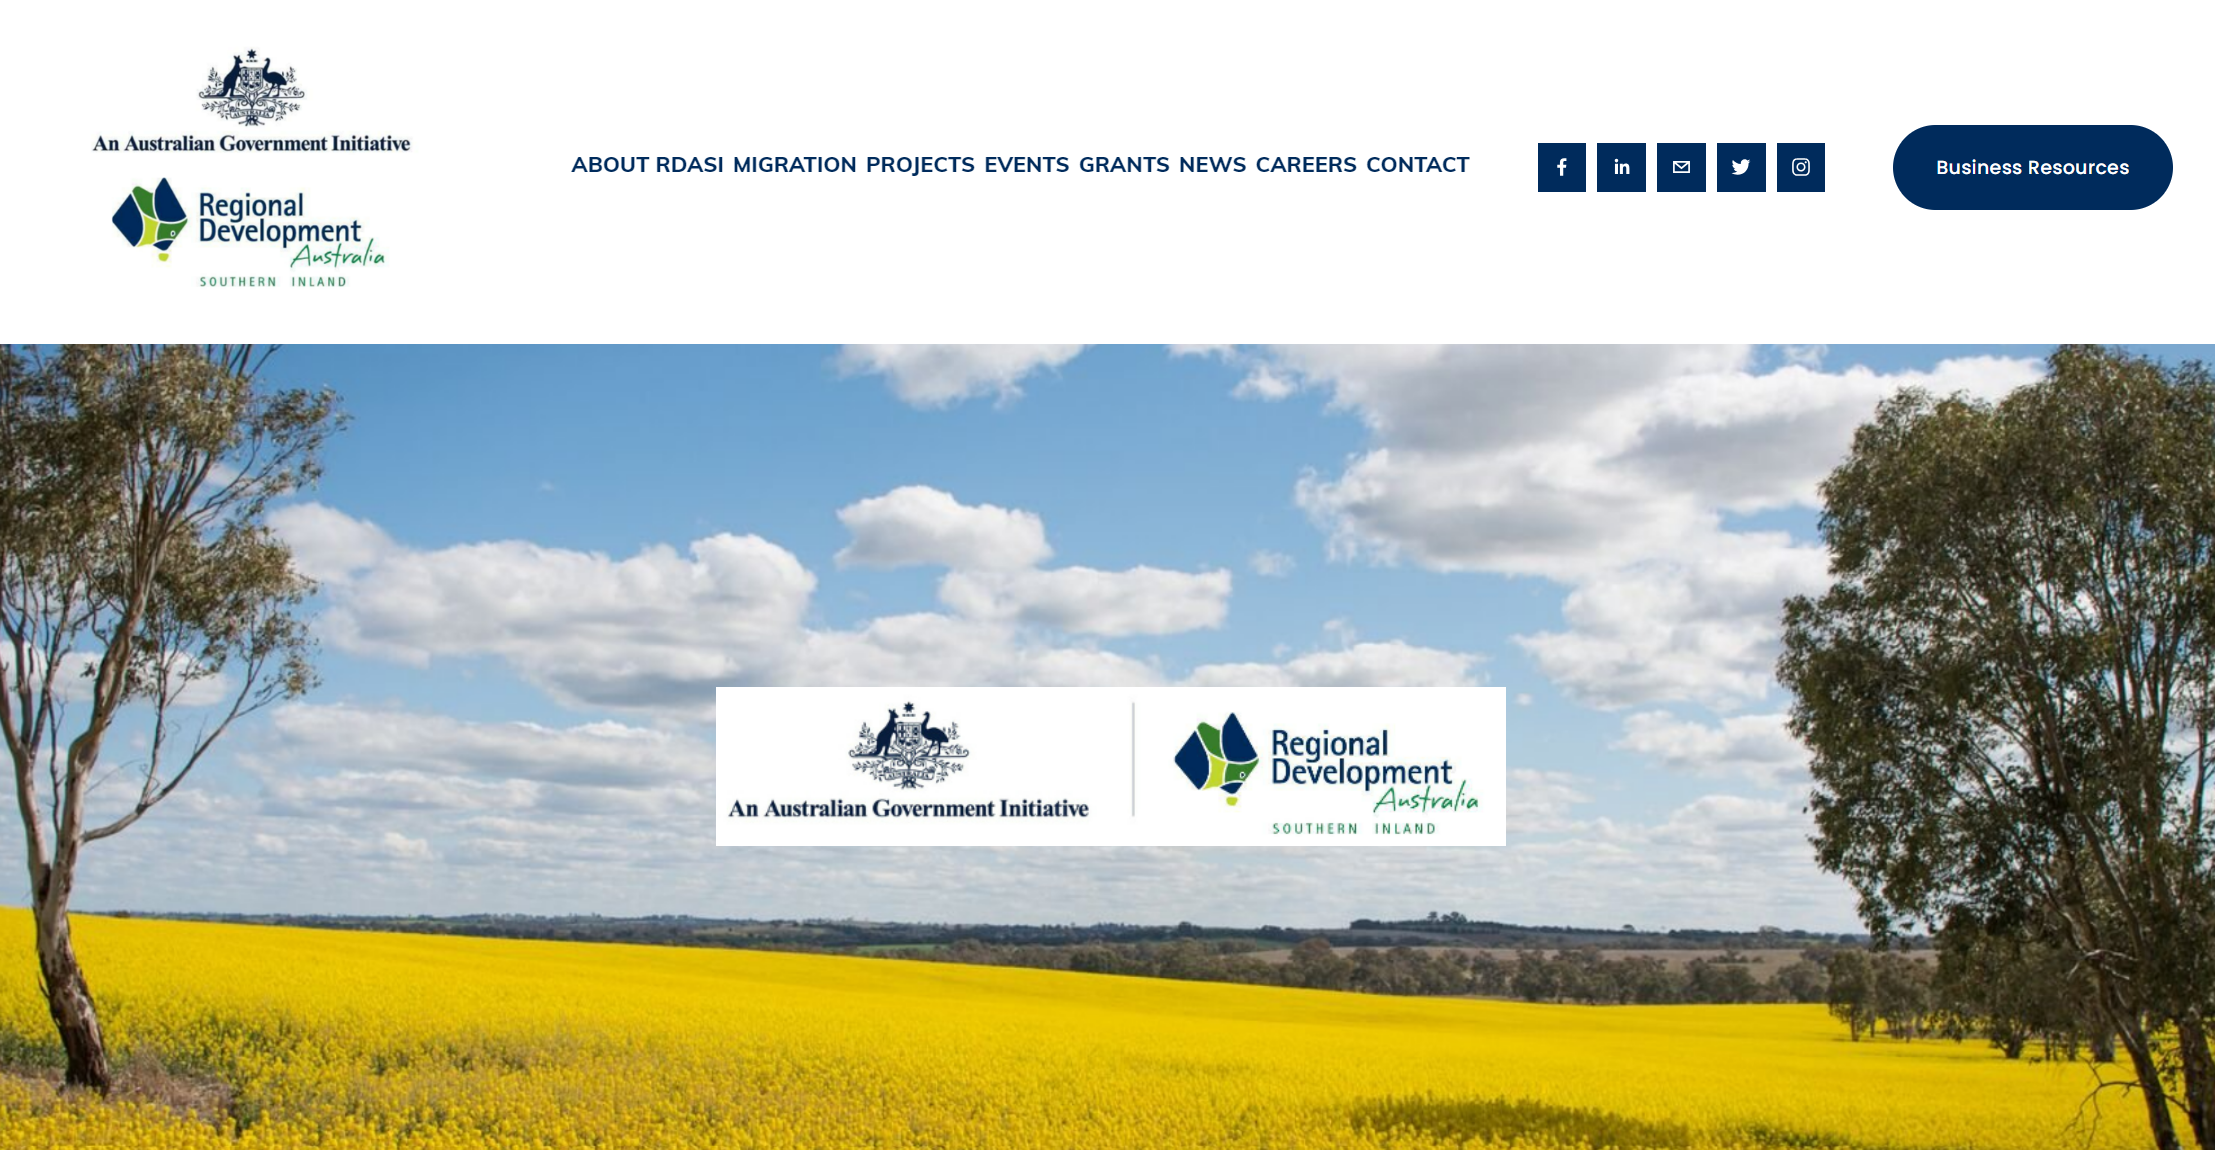 Regional Development Australia - Southern InlandWebsite